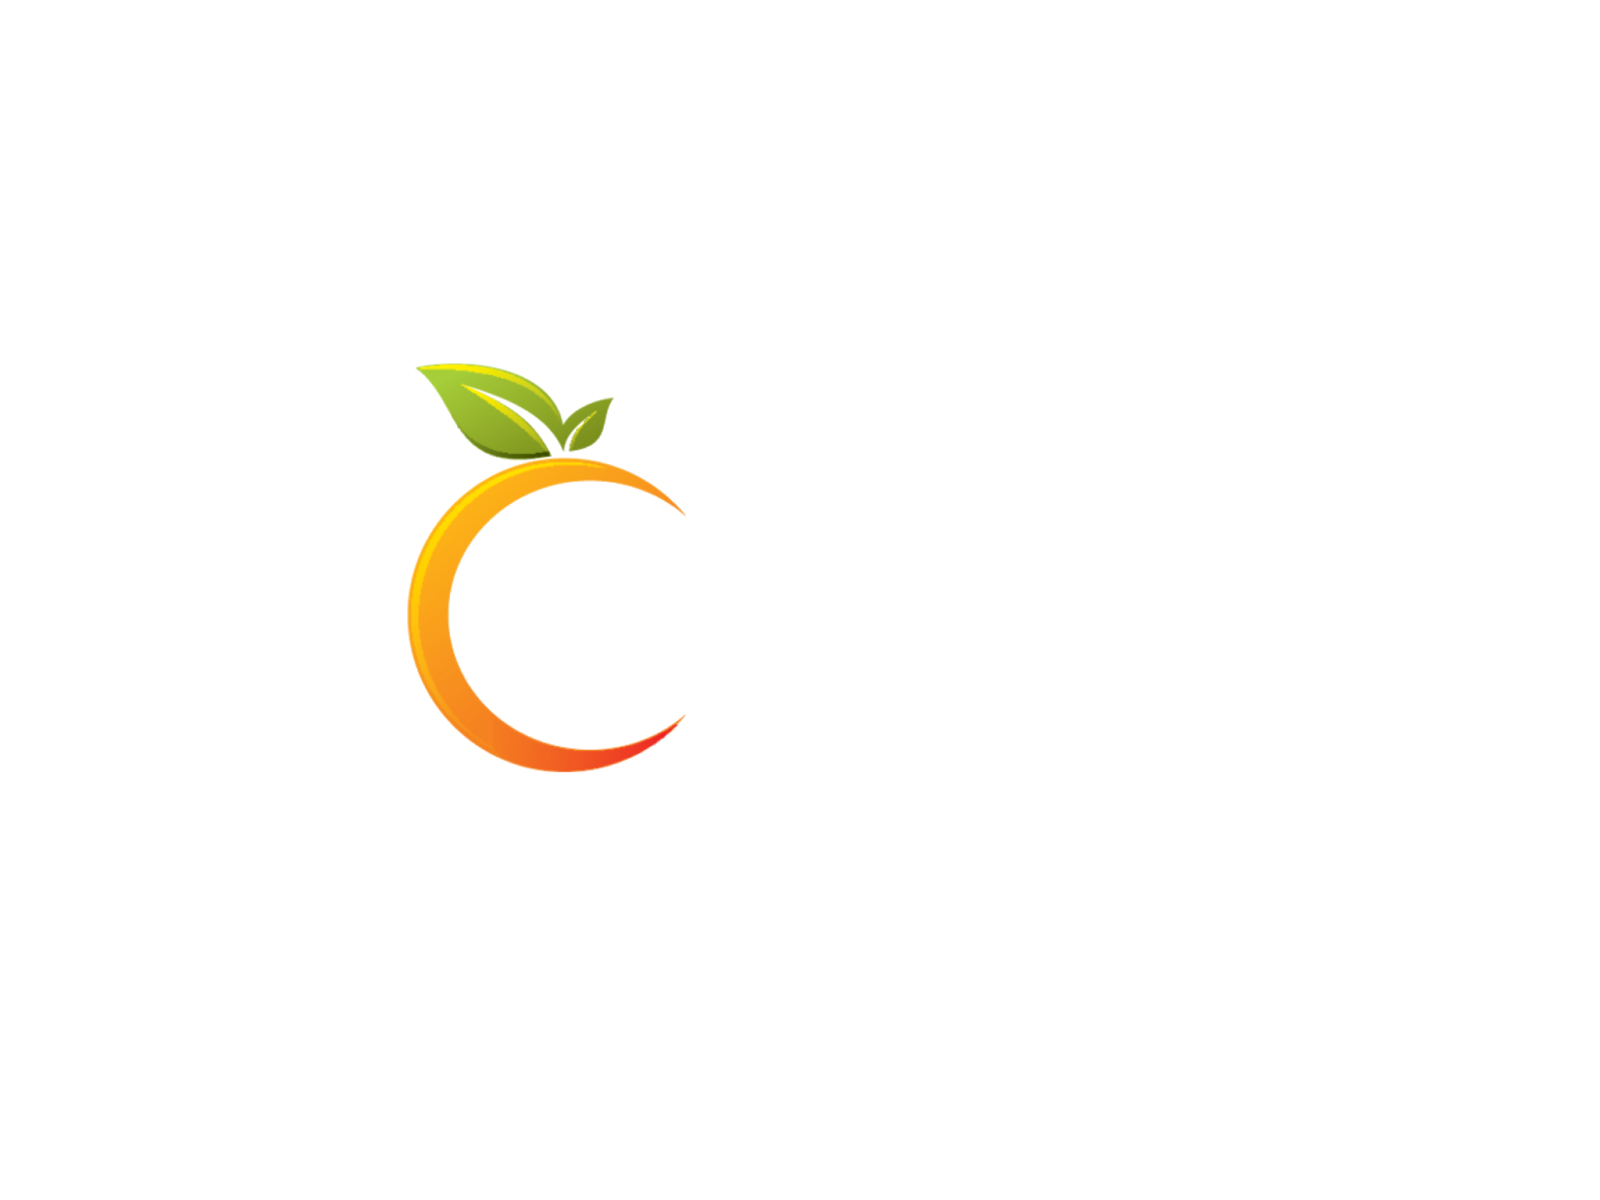 picsart blank logo